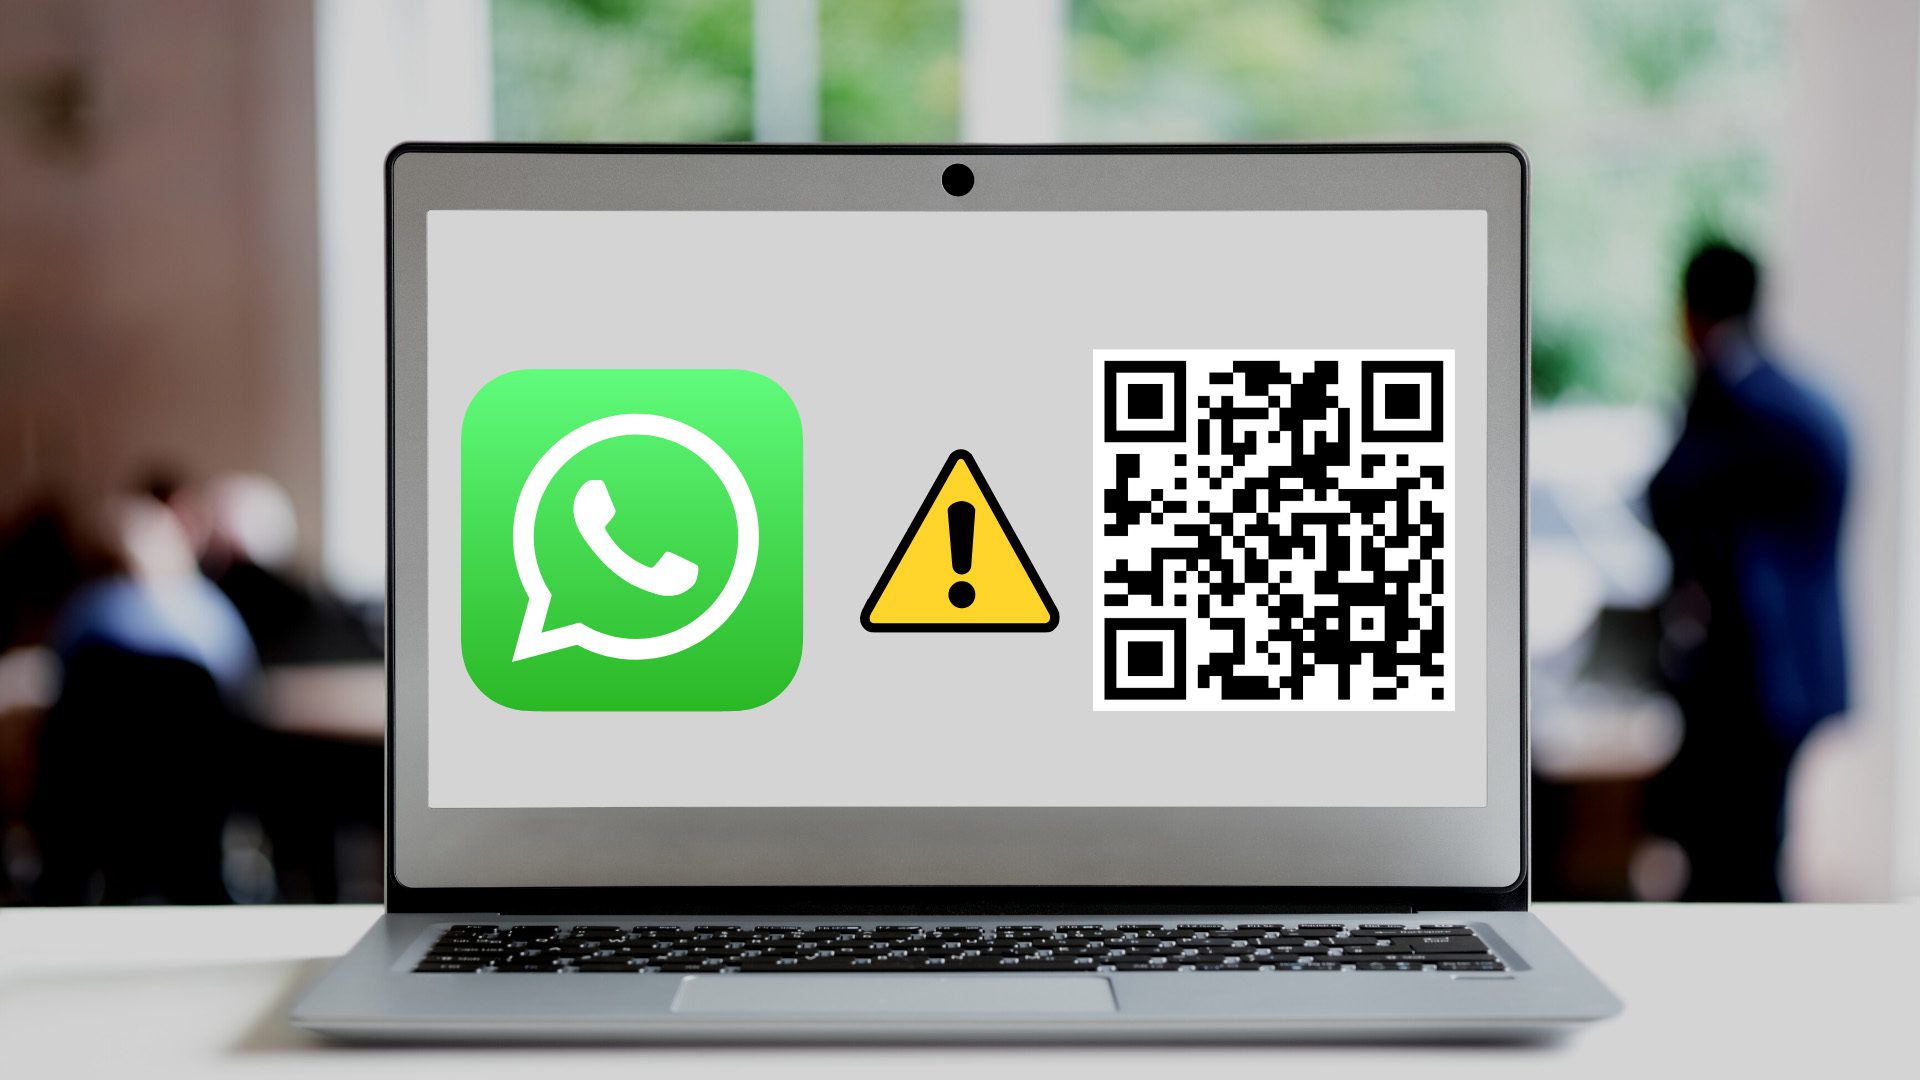 How To Fix WhatsApp QR Code Not Loading